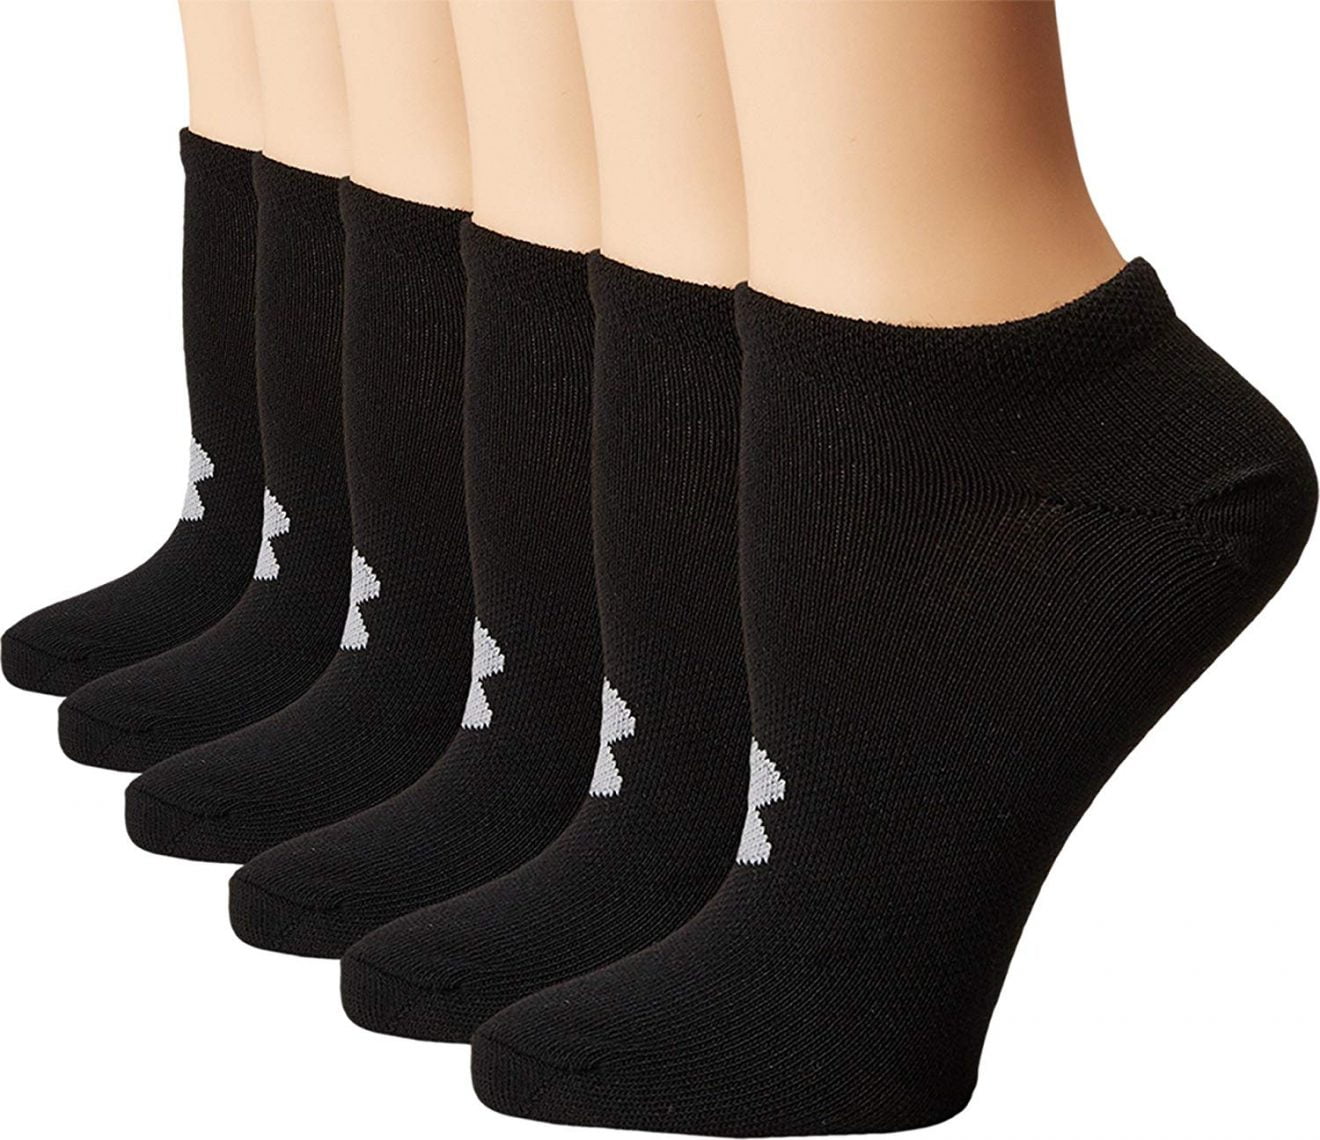 Women's Essential Socks (6 Pairs) - Useful Tools Store